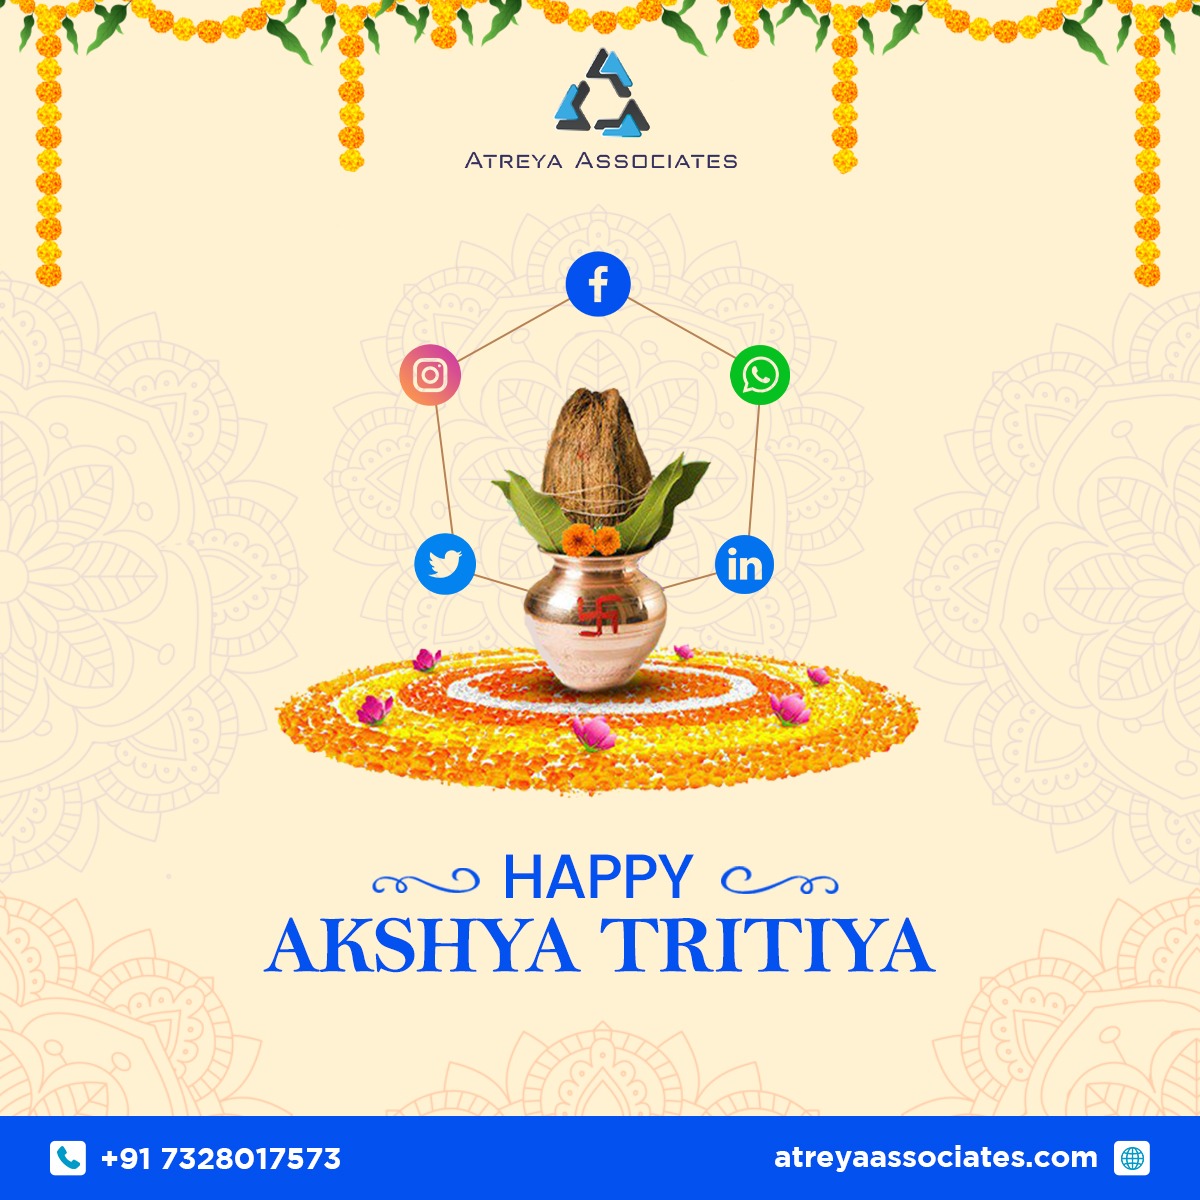 Atreya Associates wishes you a very Happy Akshaya Tritiya! May you explore through every success and joy in life and progress in all your professional and personal endeavors.

#AtreyaAssociates #AkshyaTritiya #FestivalCelebration